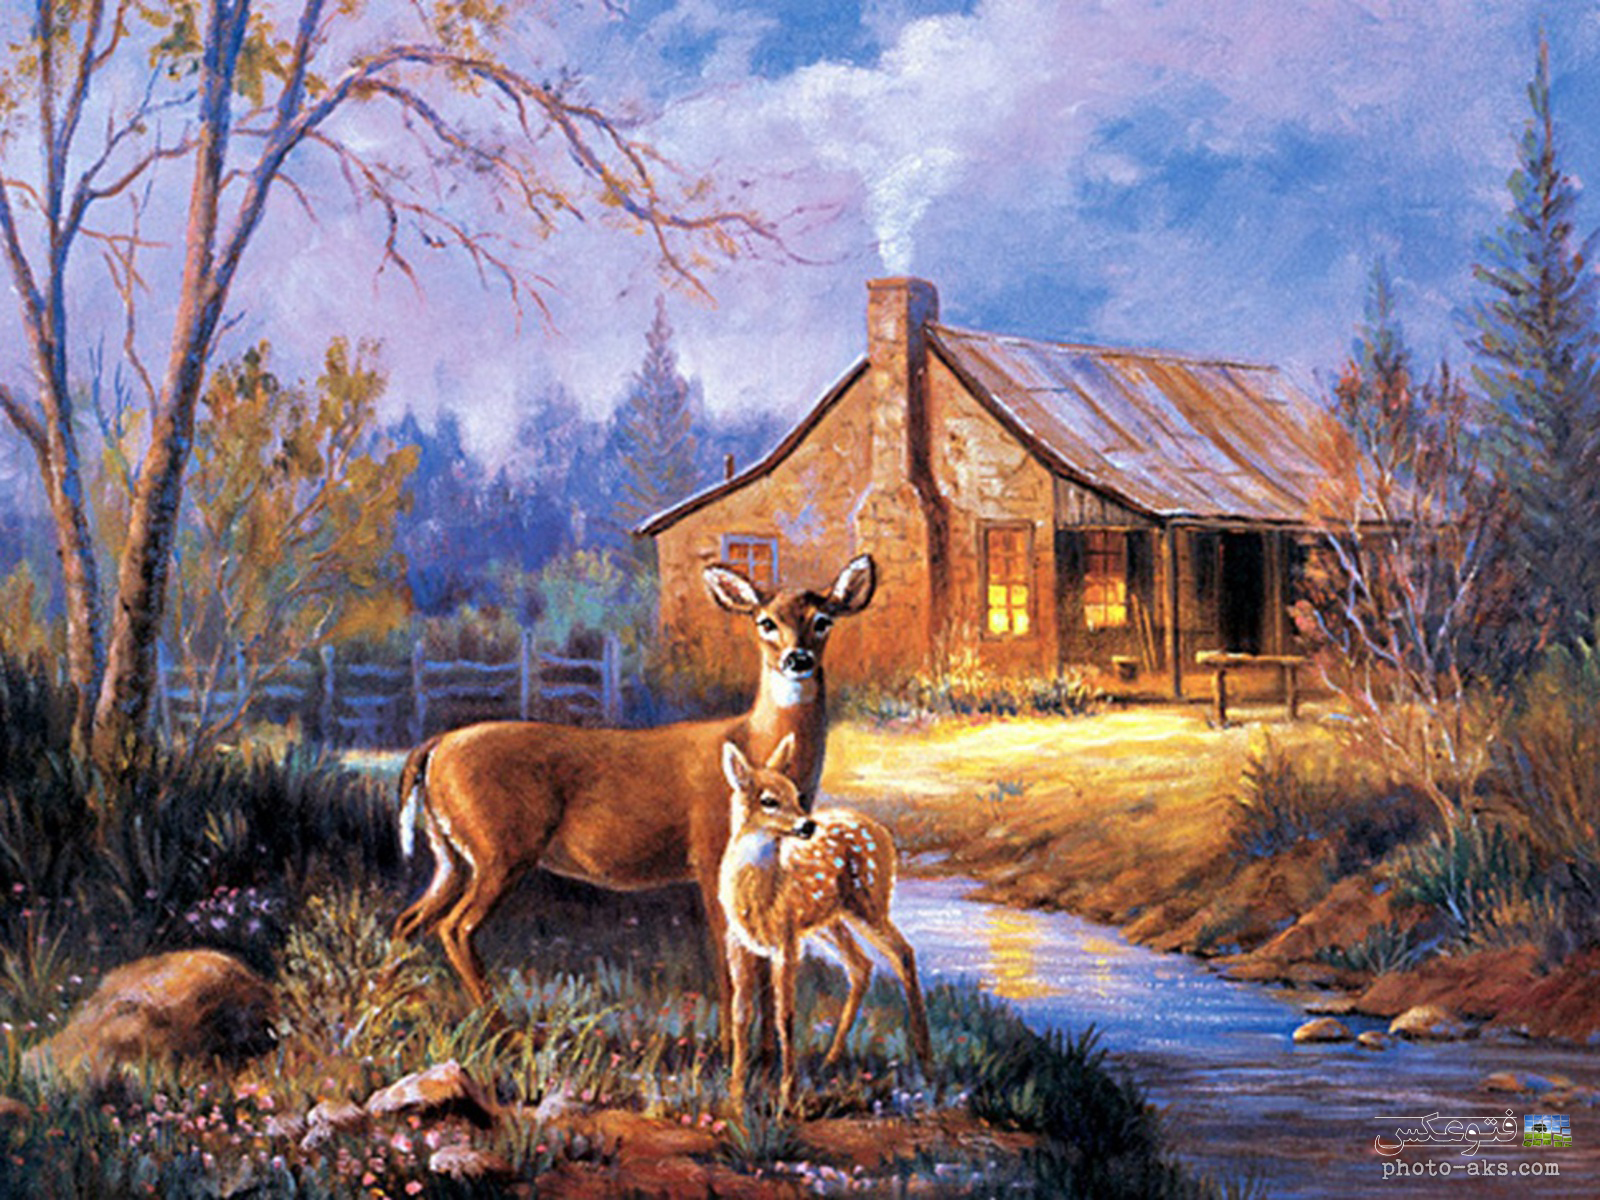                      Deer Painting Wallpaper